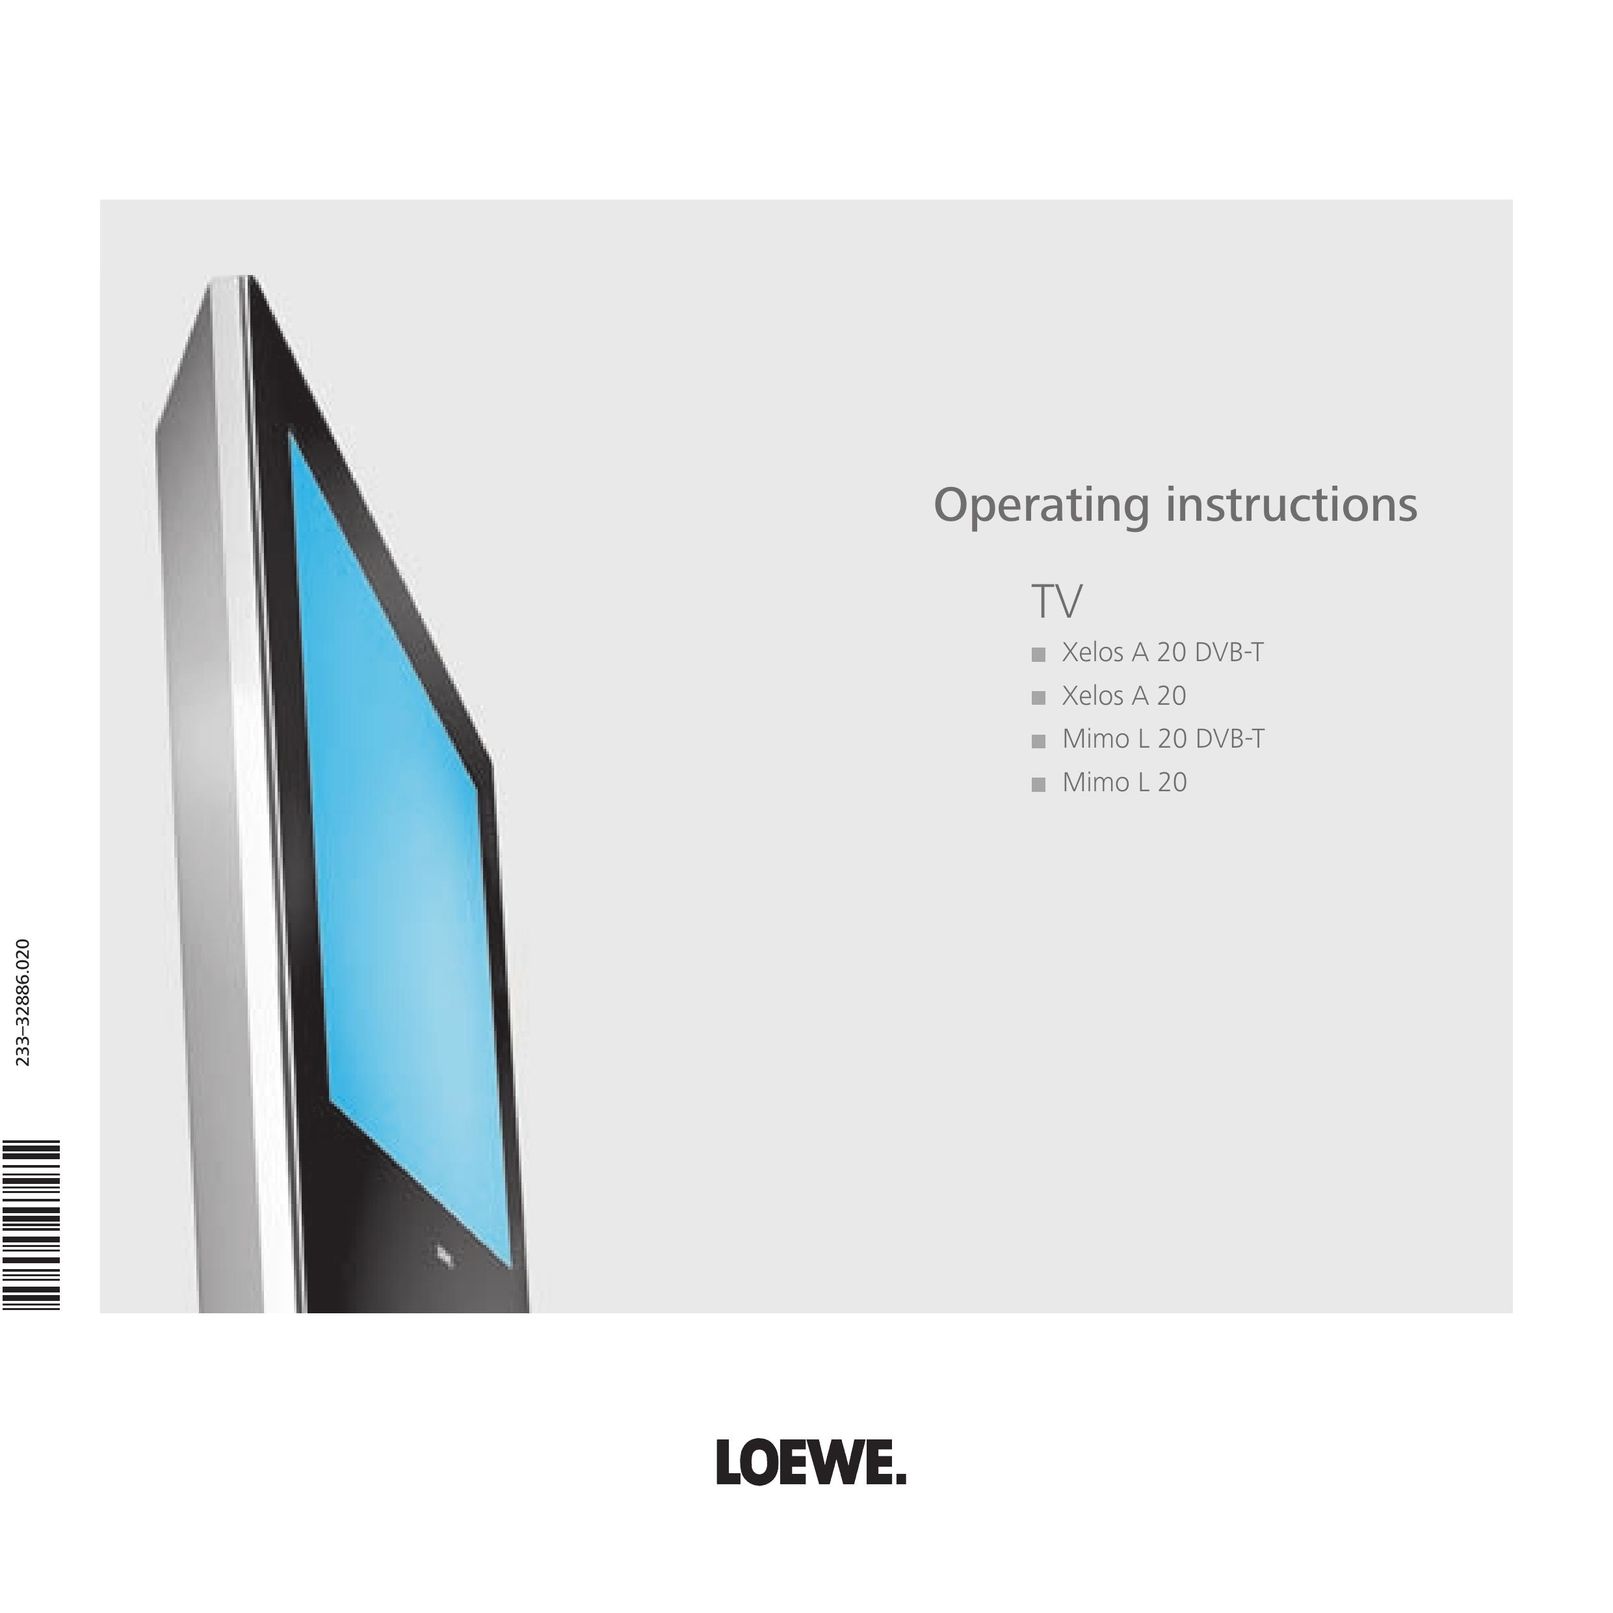 Loewe A 20 DVB-T Flat Panel Television User Manual